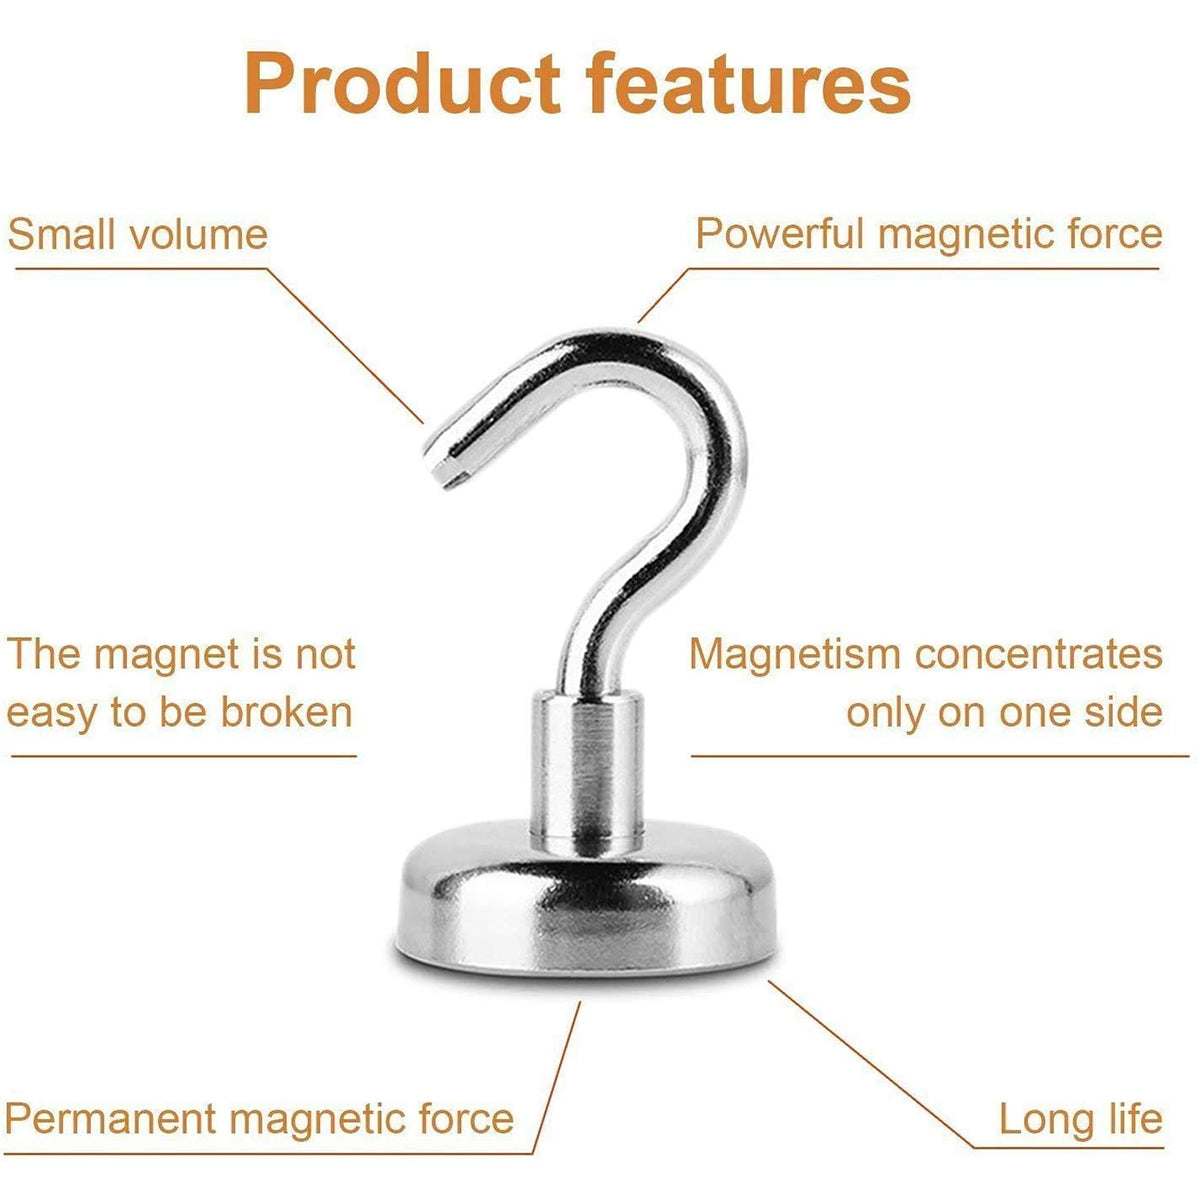 Magnetic Hooks for Multi-Function on Metal Surface LifeKrafts